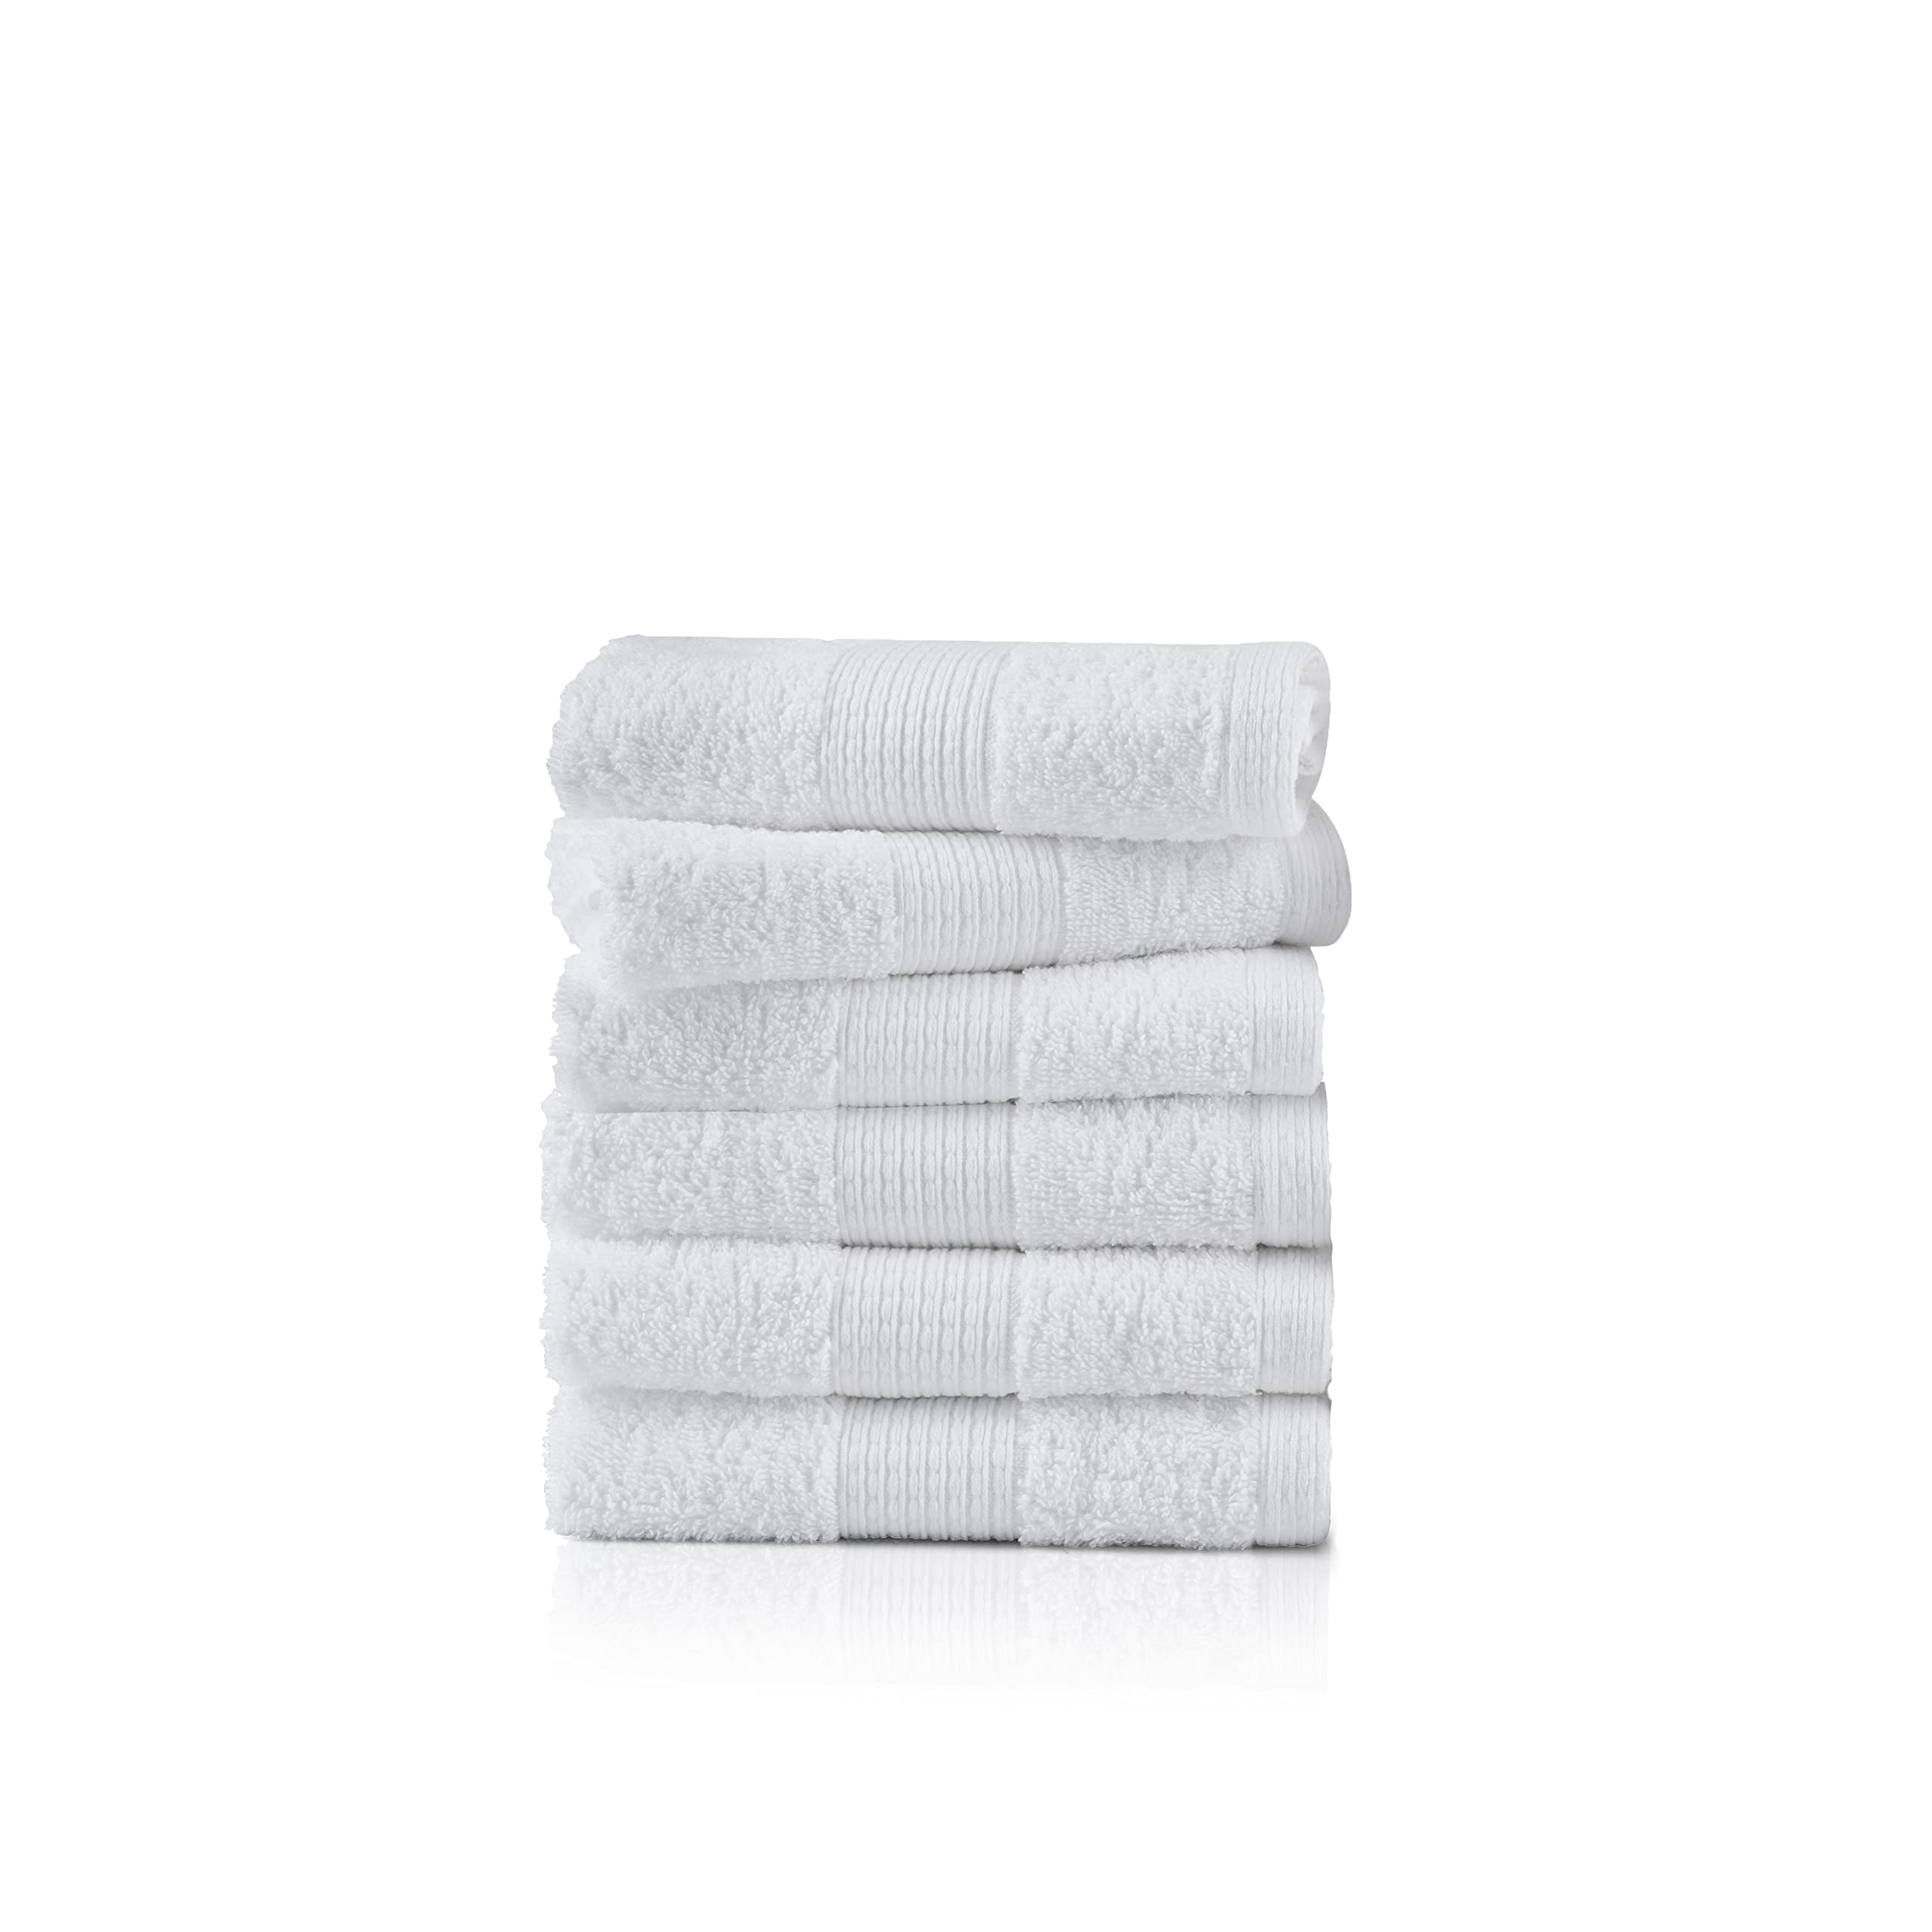 LANE LINEN Cotton Bath Towels for Bathroom Set - 18 PC Bathroom Towels Set  - 4 Bathroom Towel Set, 6 Hand Towels for Bathroom, 8 Washcloths, Soft